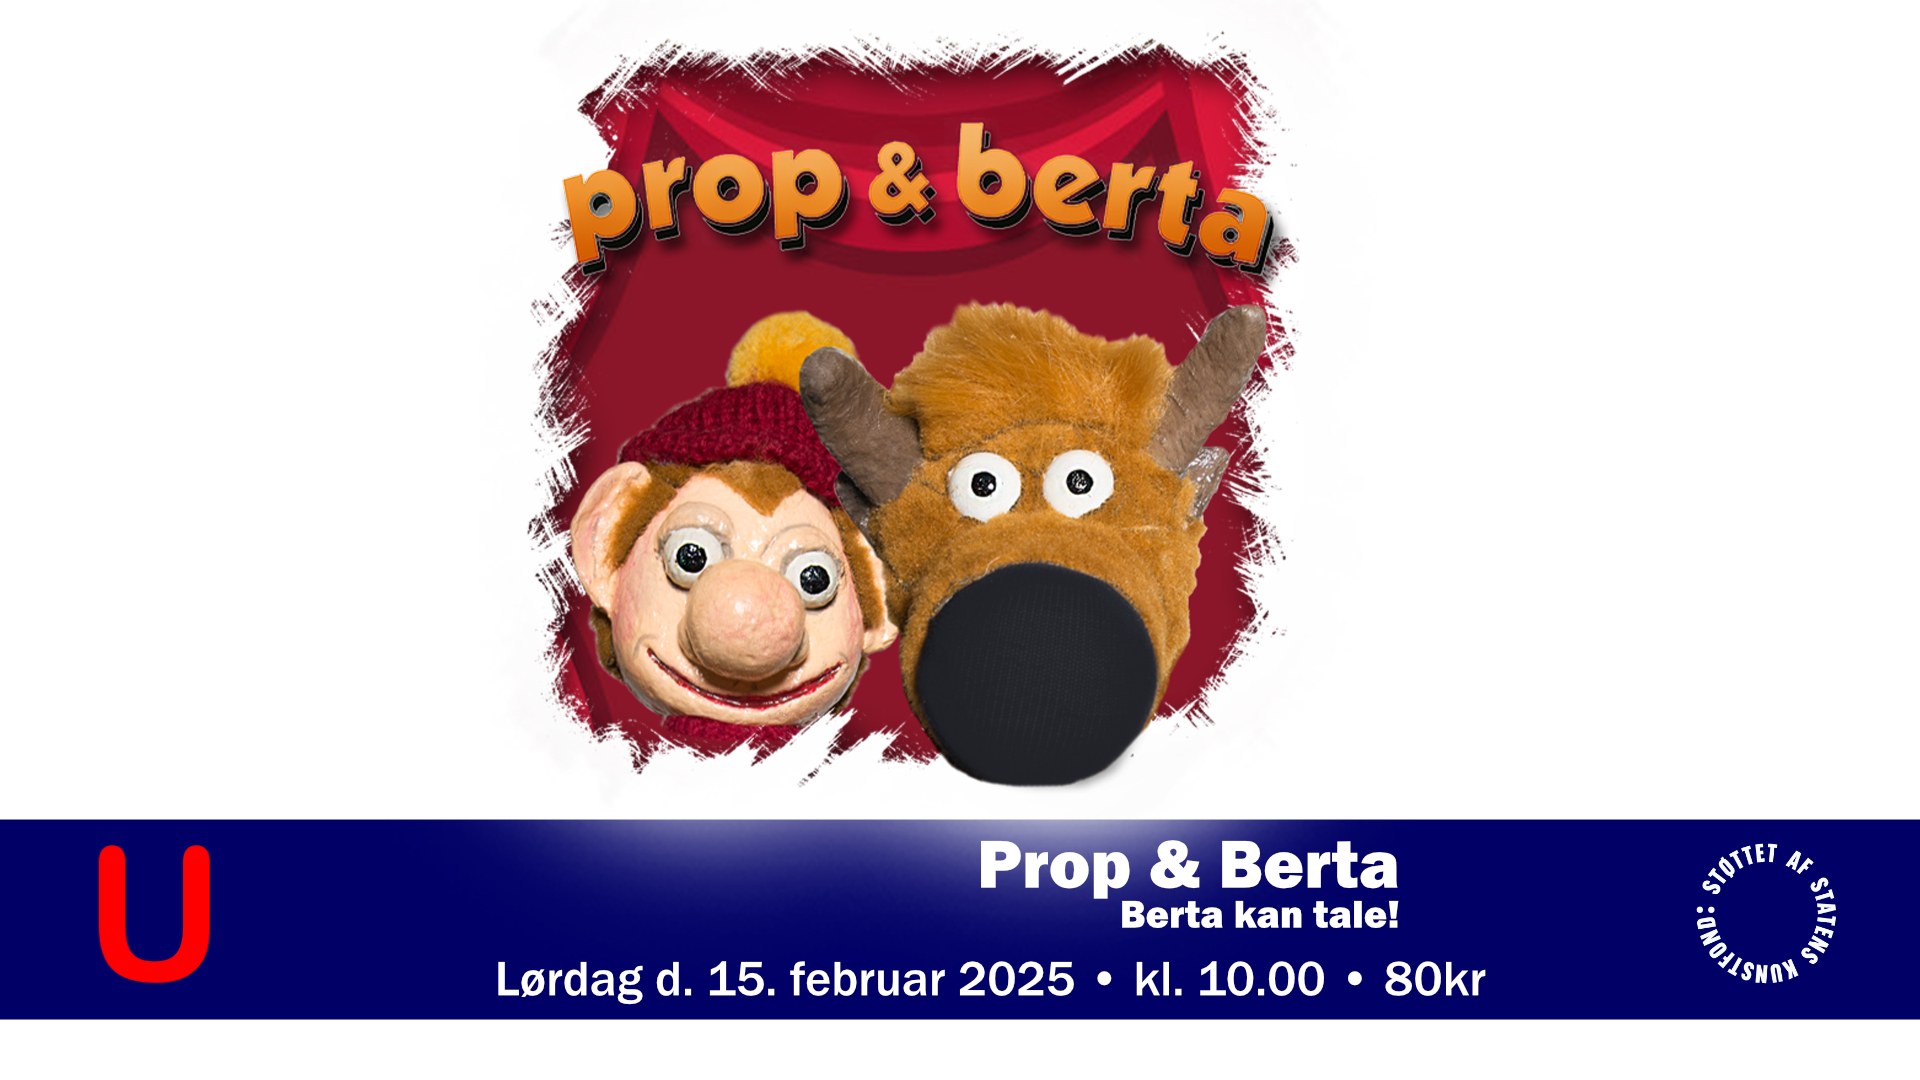 Prop og Berta - Prop kan tale!